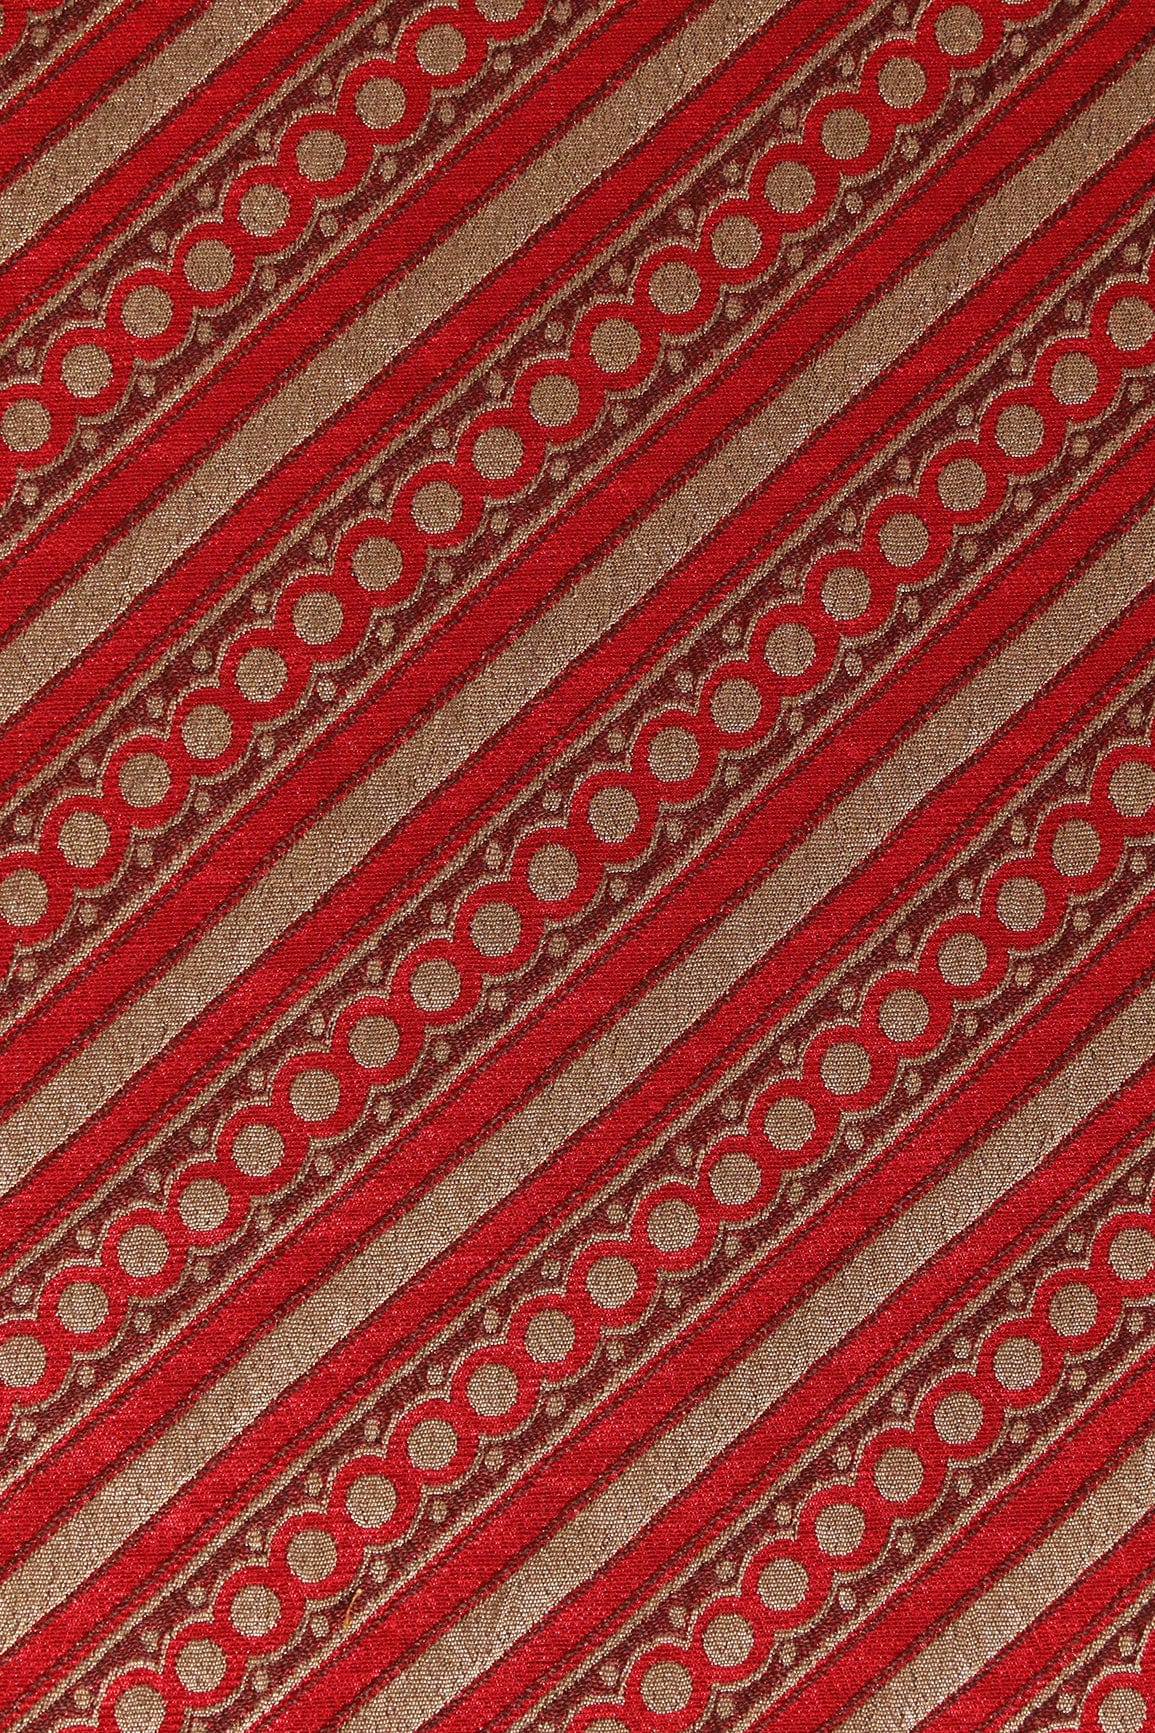 doeraa Banarasi Fabrics Red And Beige Stripes Silk Satin Jute Banarasi Jacquard Fabric